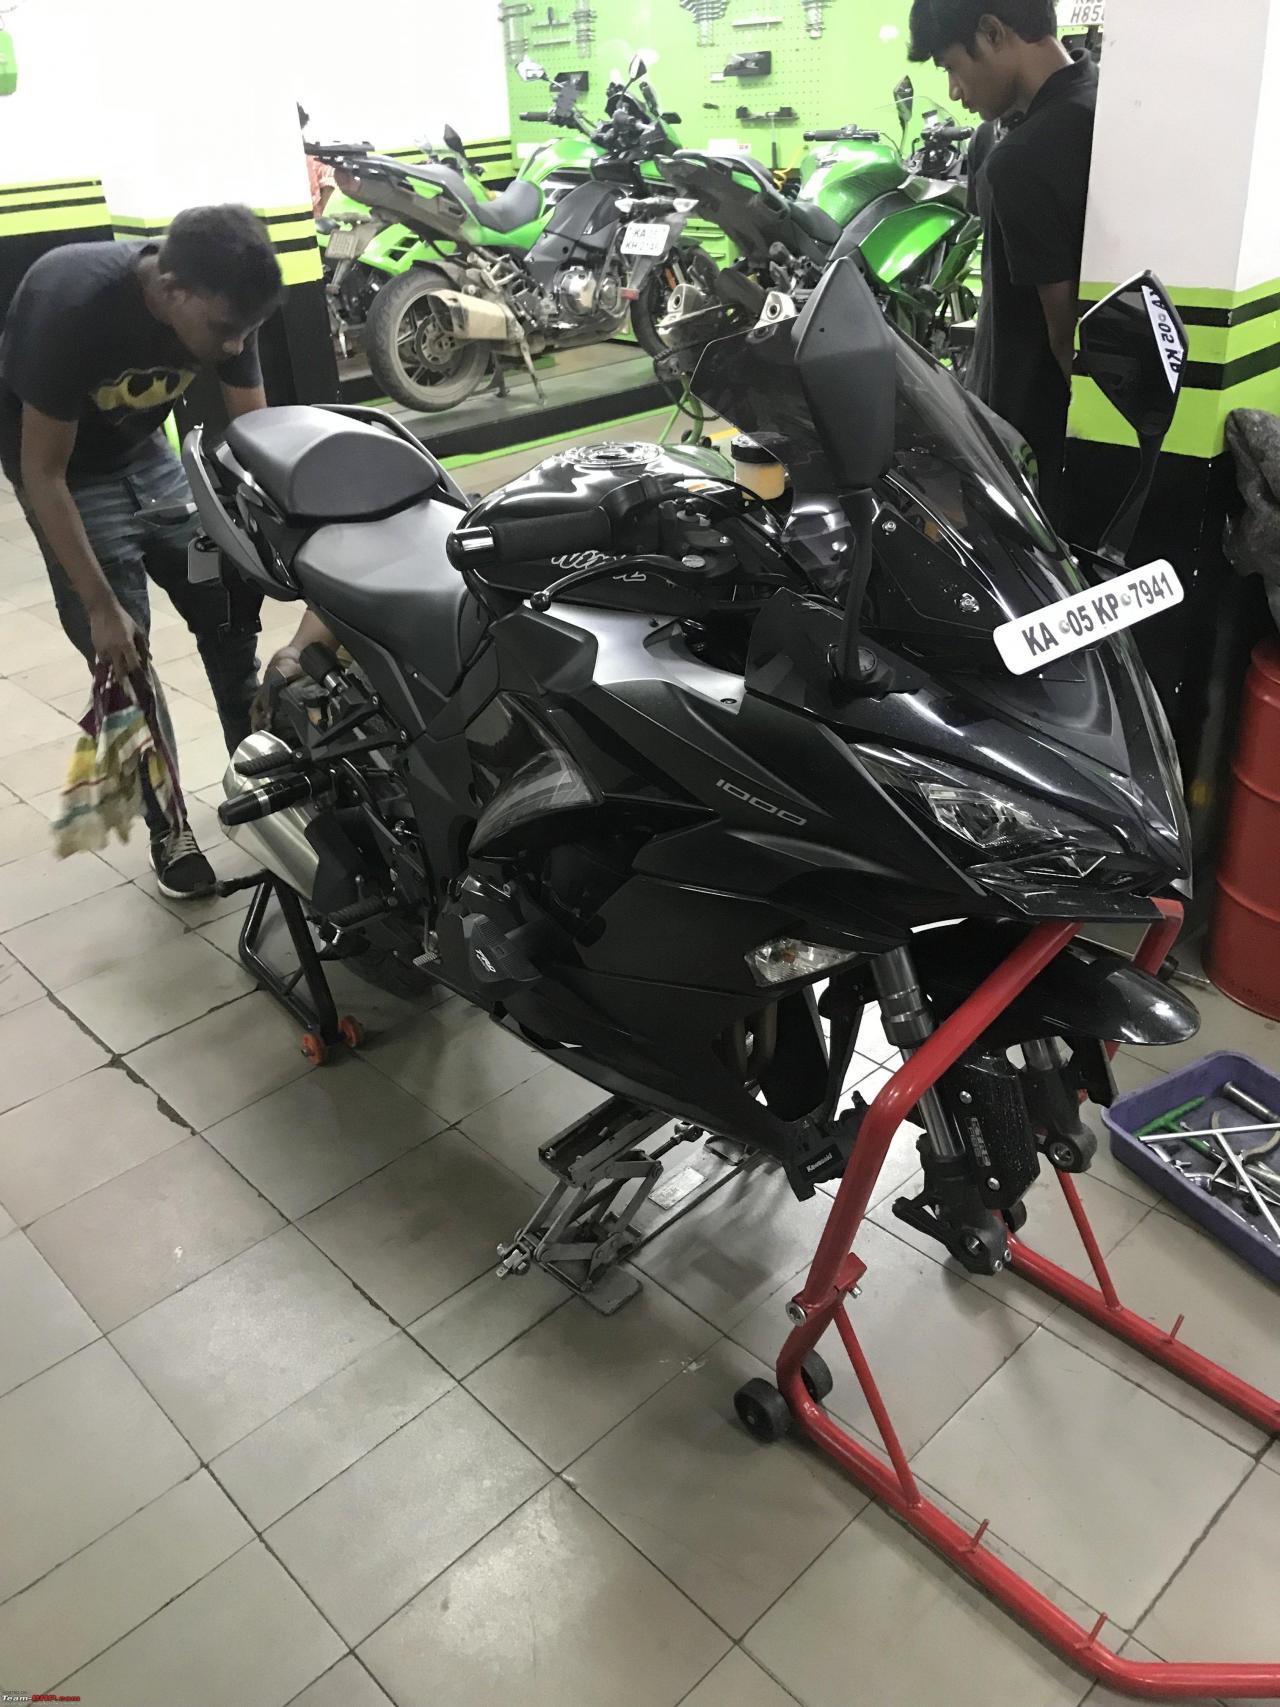 My 2019 Kawasaki Ninja 1000: 3 year ownership update | Team-BHP